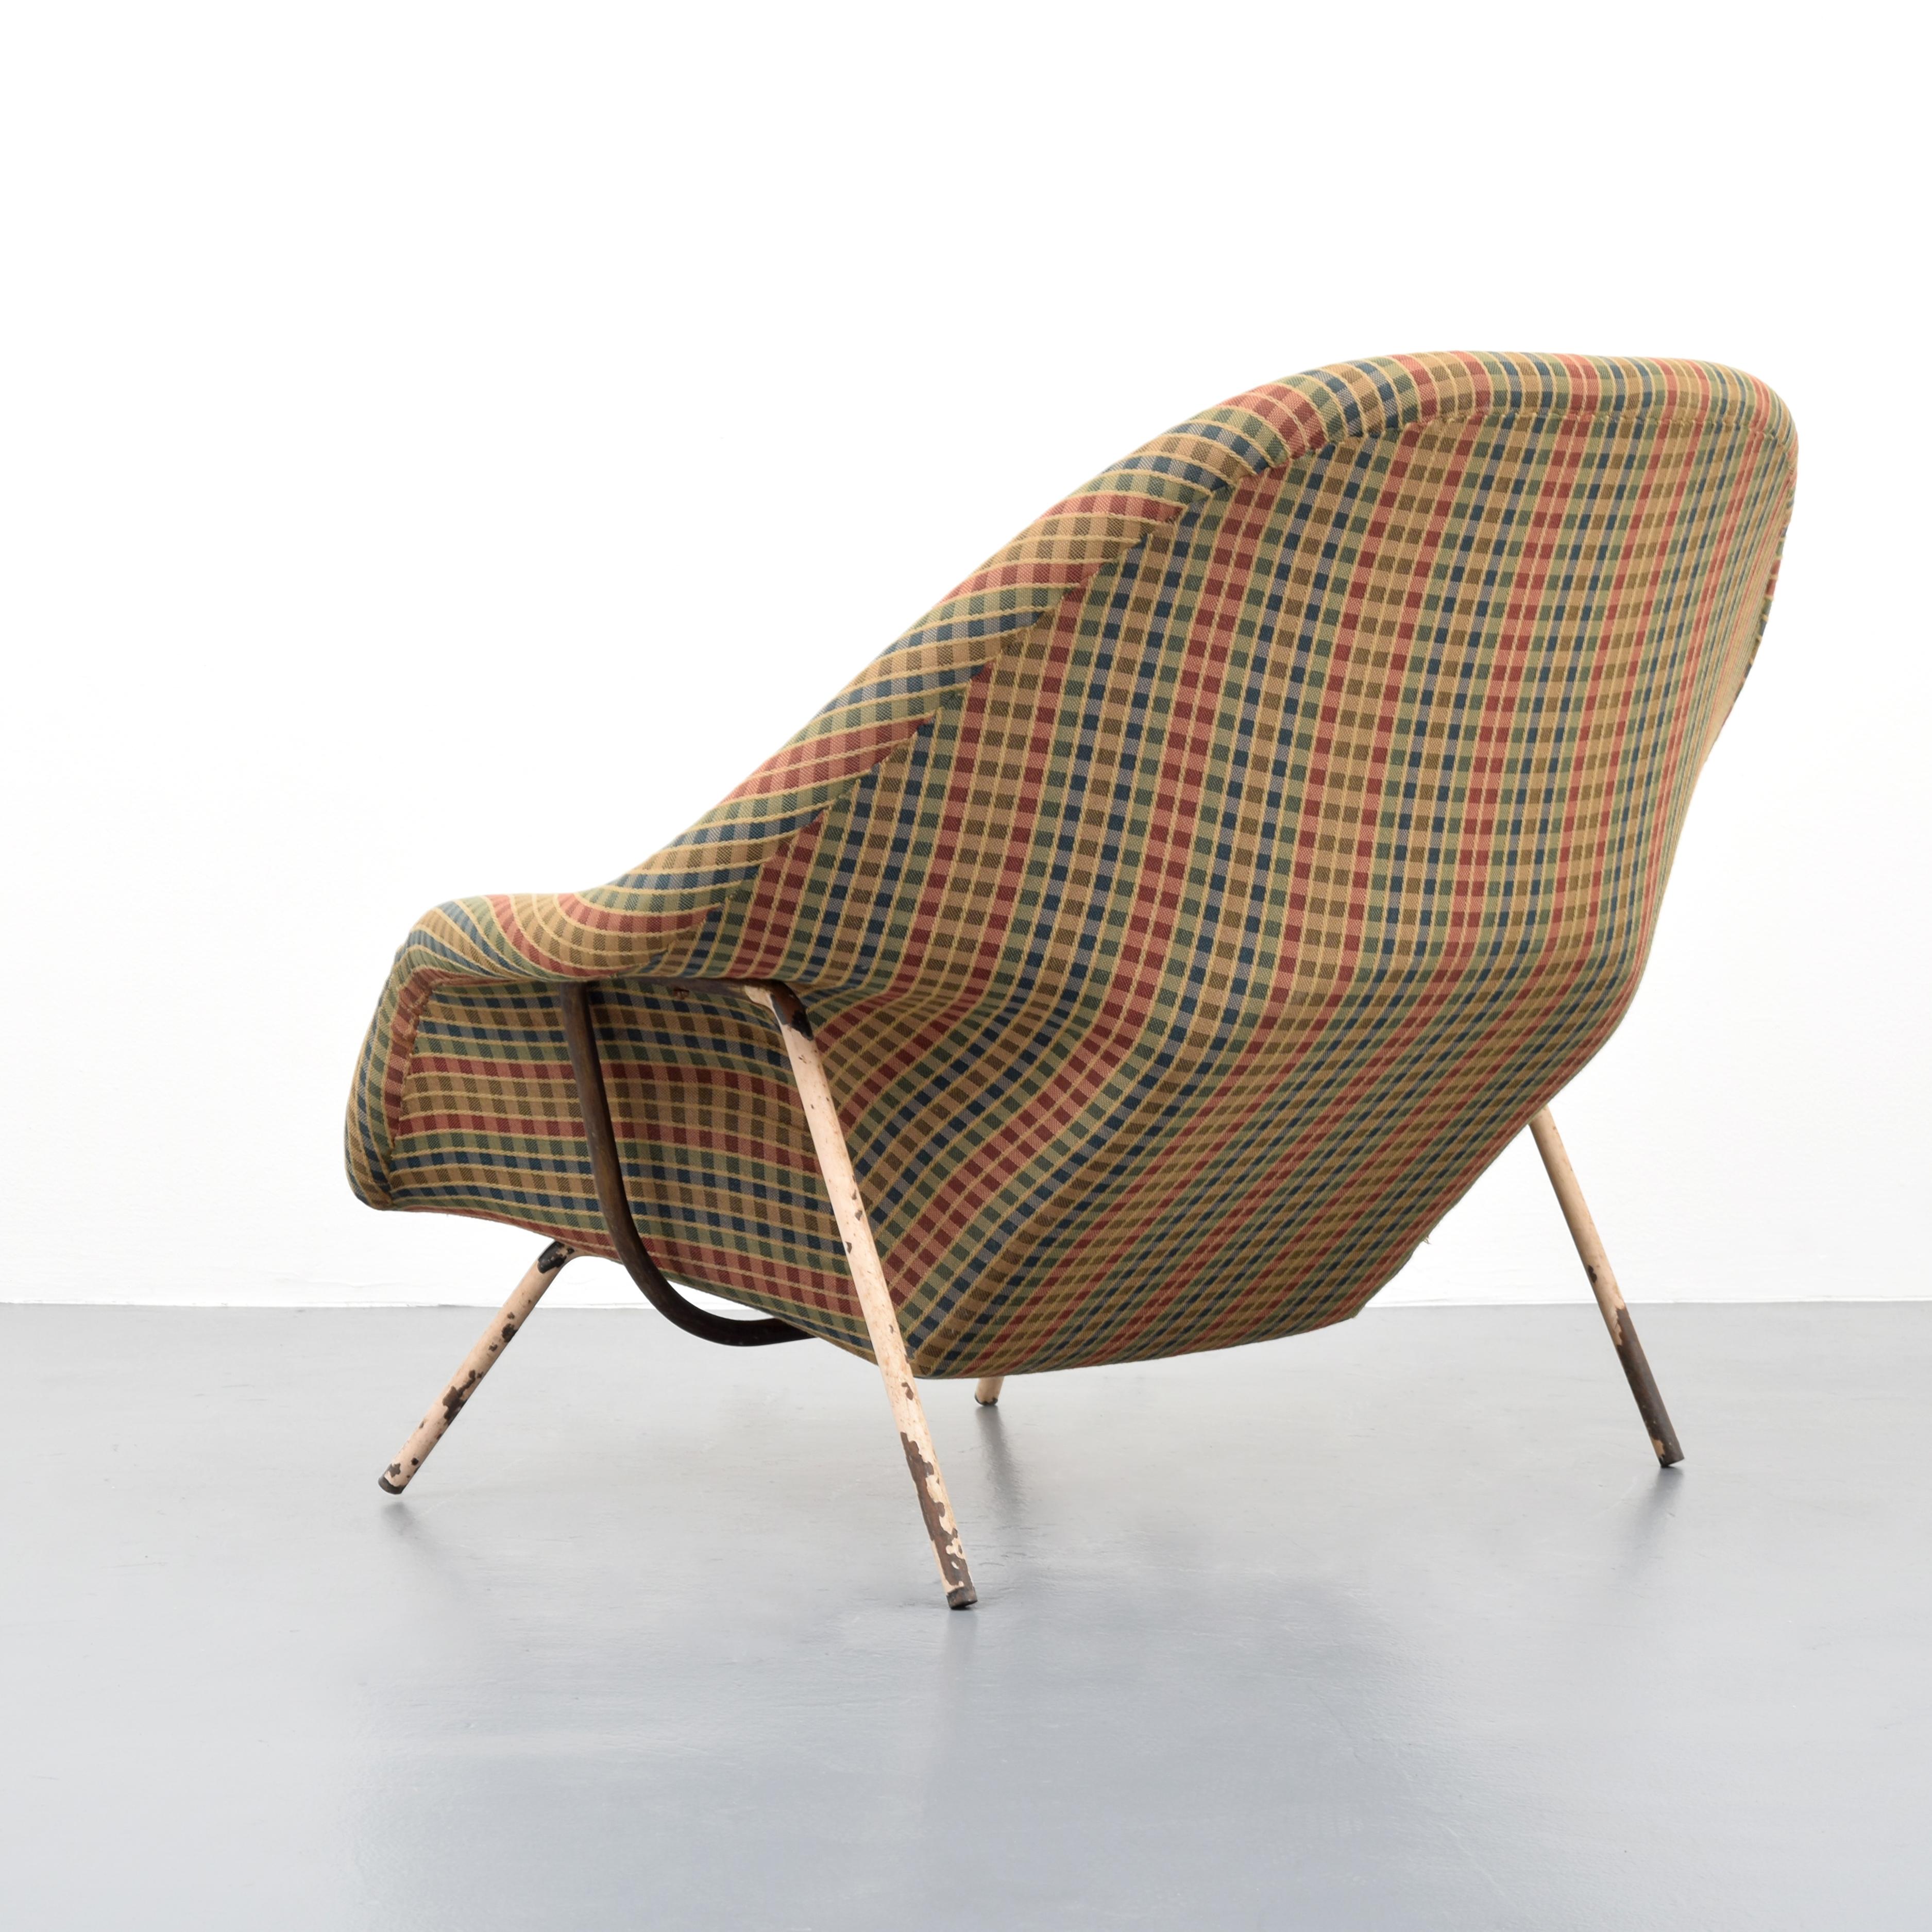 Artist/Designer: Eero Saarinen (Finnish-American, 1910-1961); Knoll

Additional Information: Chair is upholstered in Jack Lenor Larsen fabric.

Marking(s); notes: no marking(s) apparent

Country of origin; materials: USA; enameled steel,